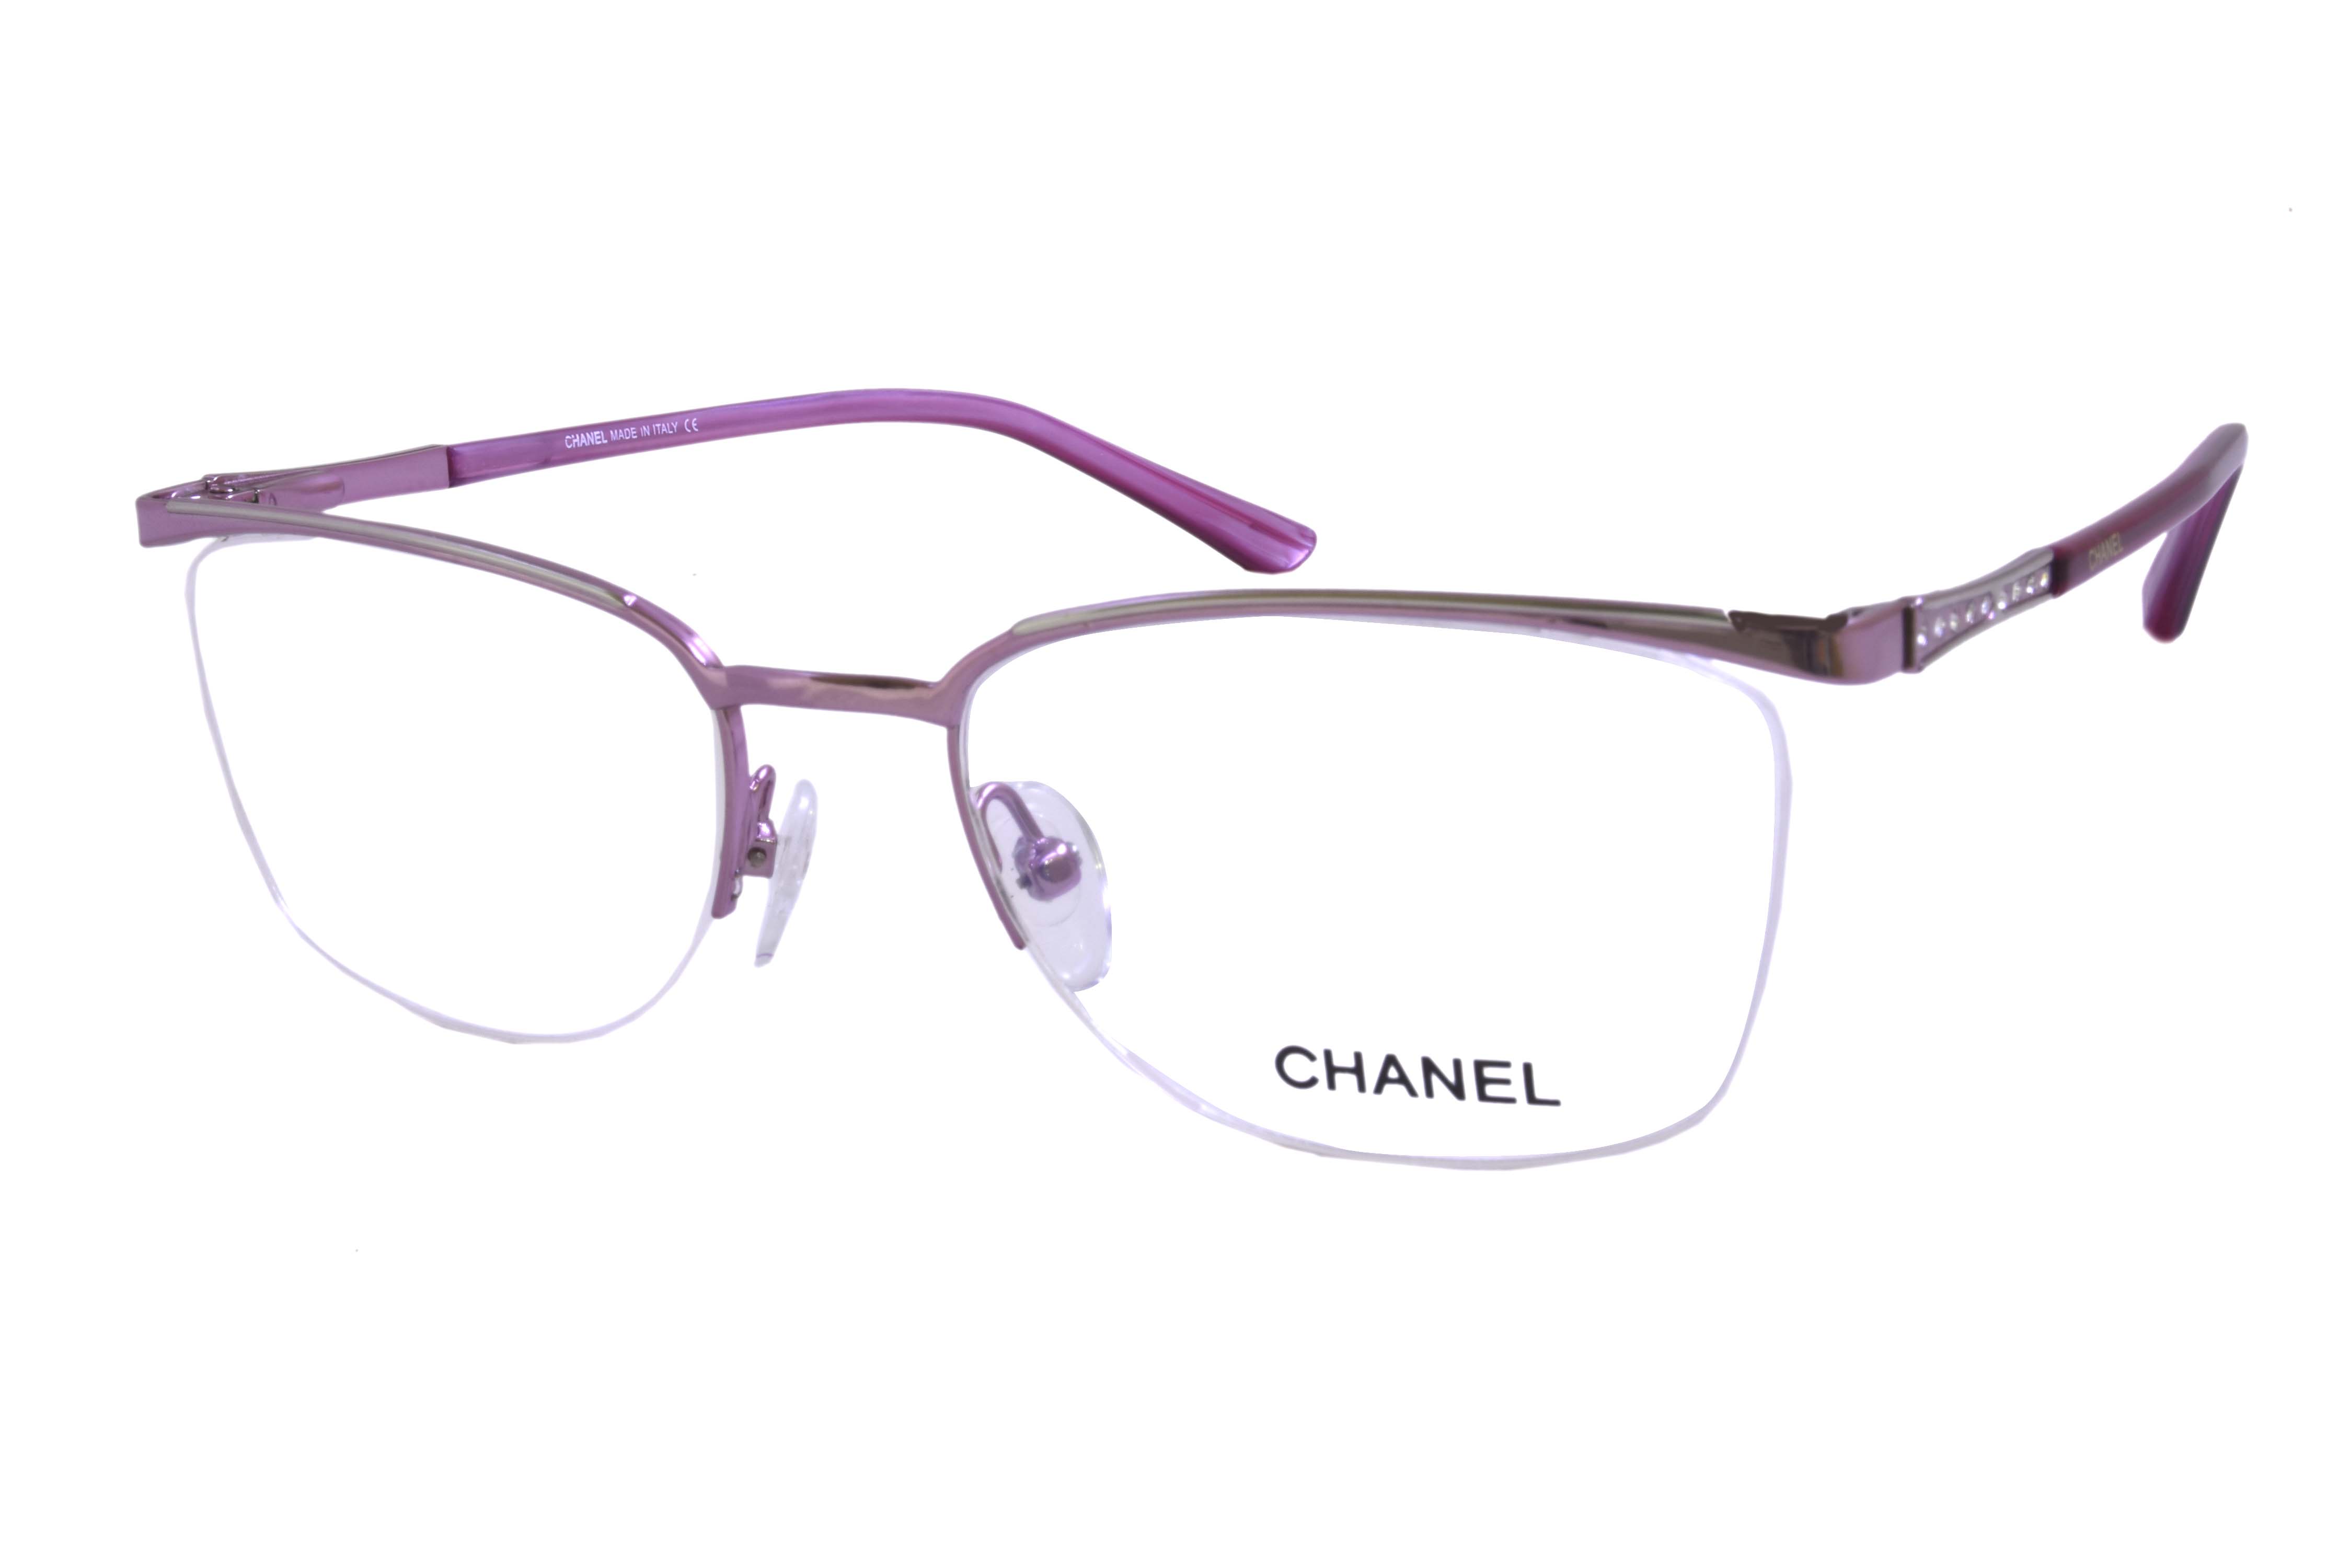 Chanel Glasses Price in Pakistan | Chanel Glasses Women | Ainak.pk